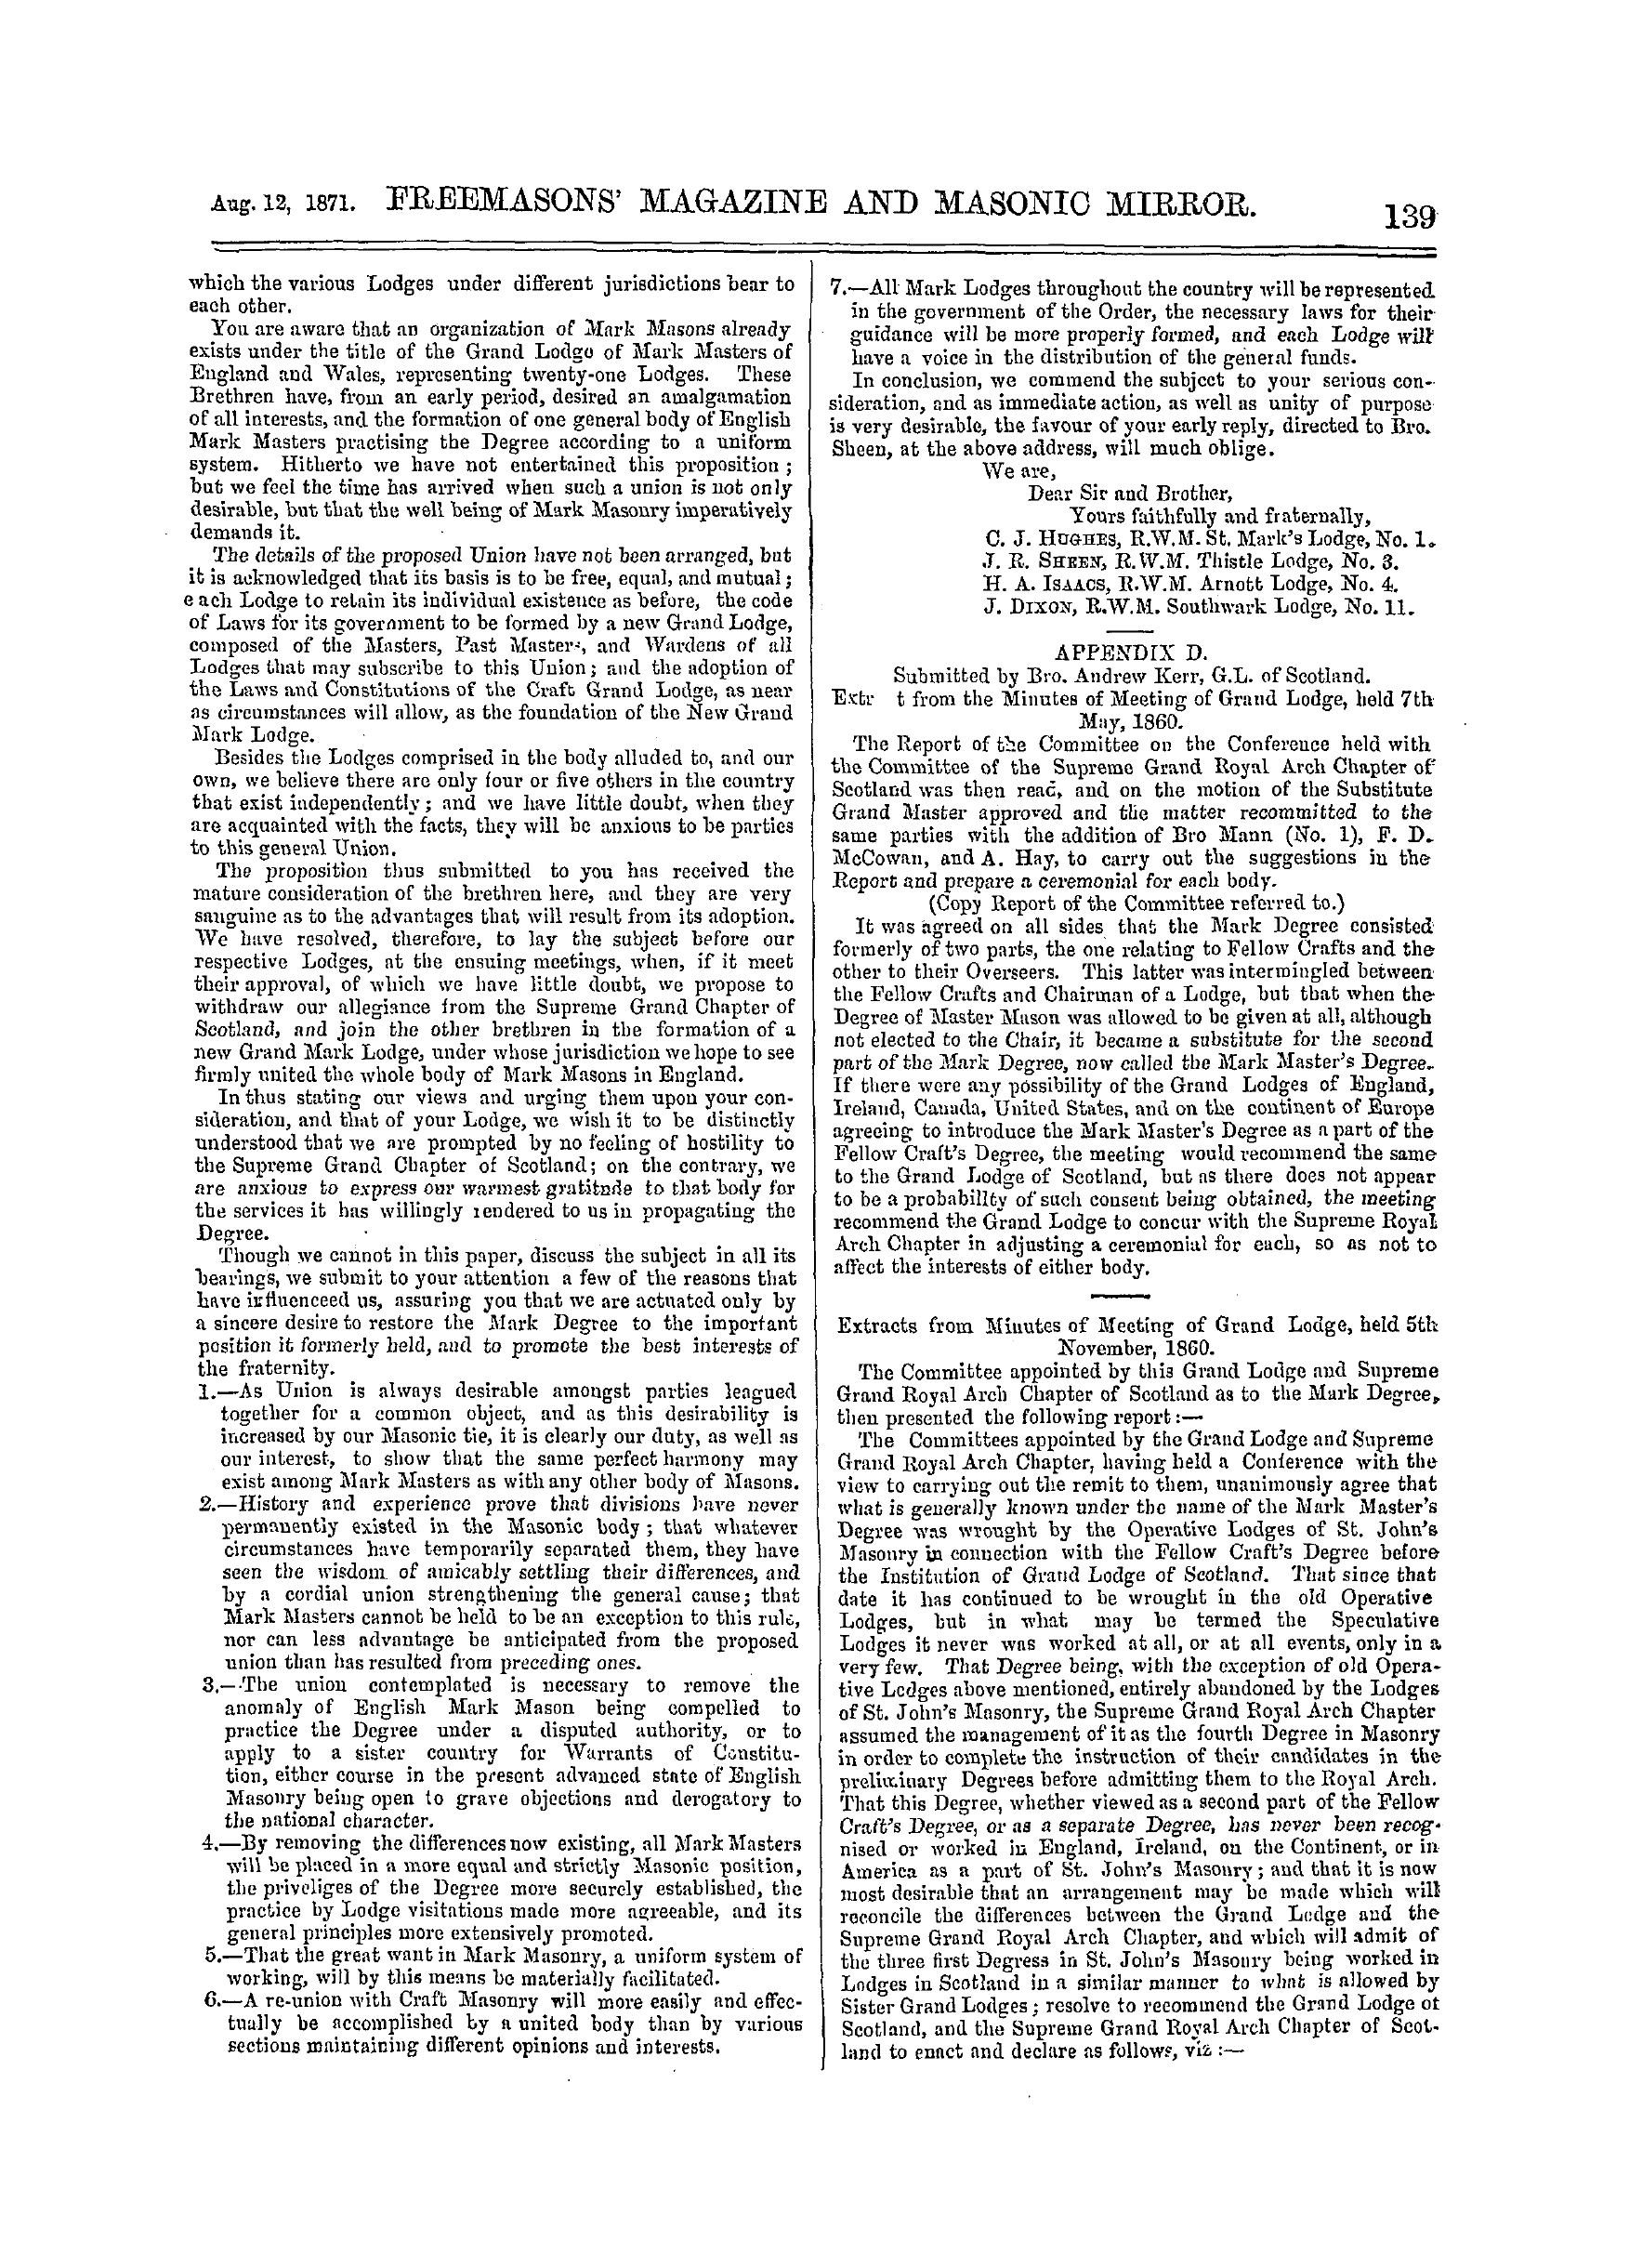 The Freemasons' Monthly Magazine: 1871-08-12 - The Mark Degree In England.